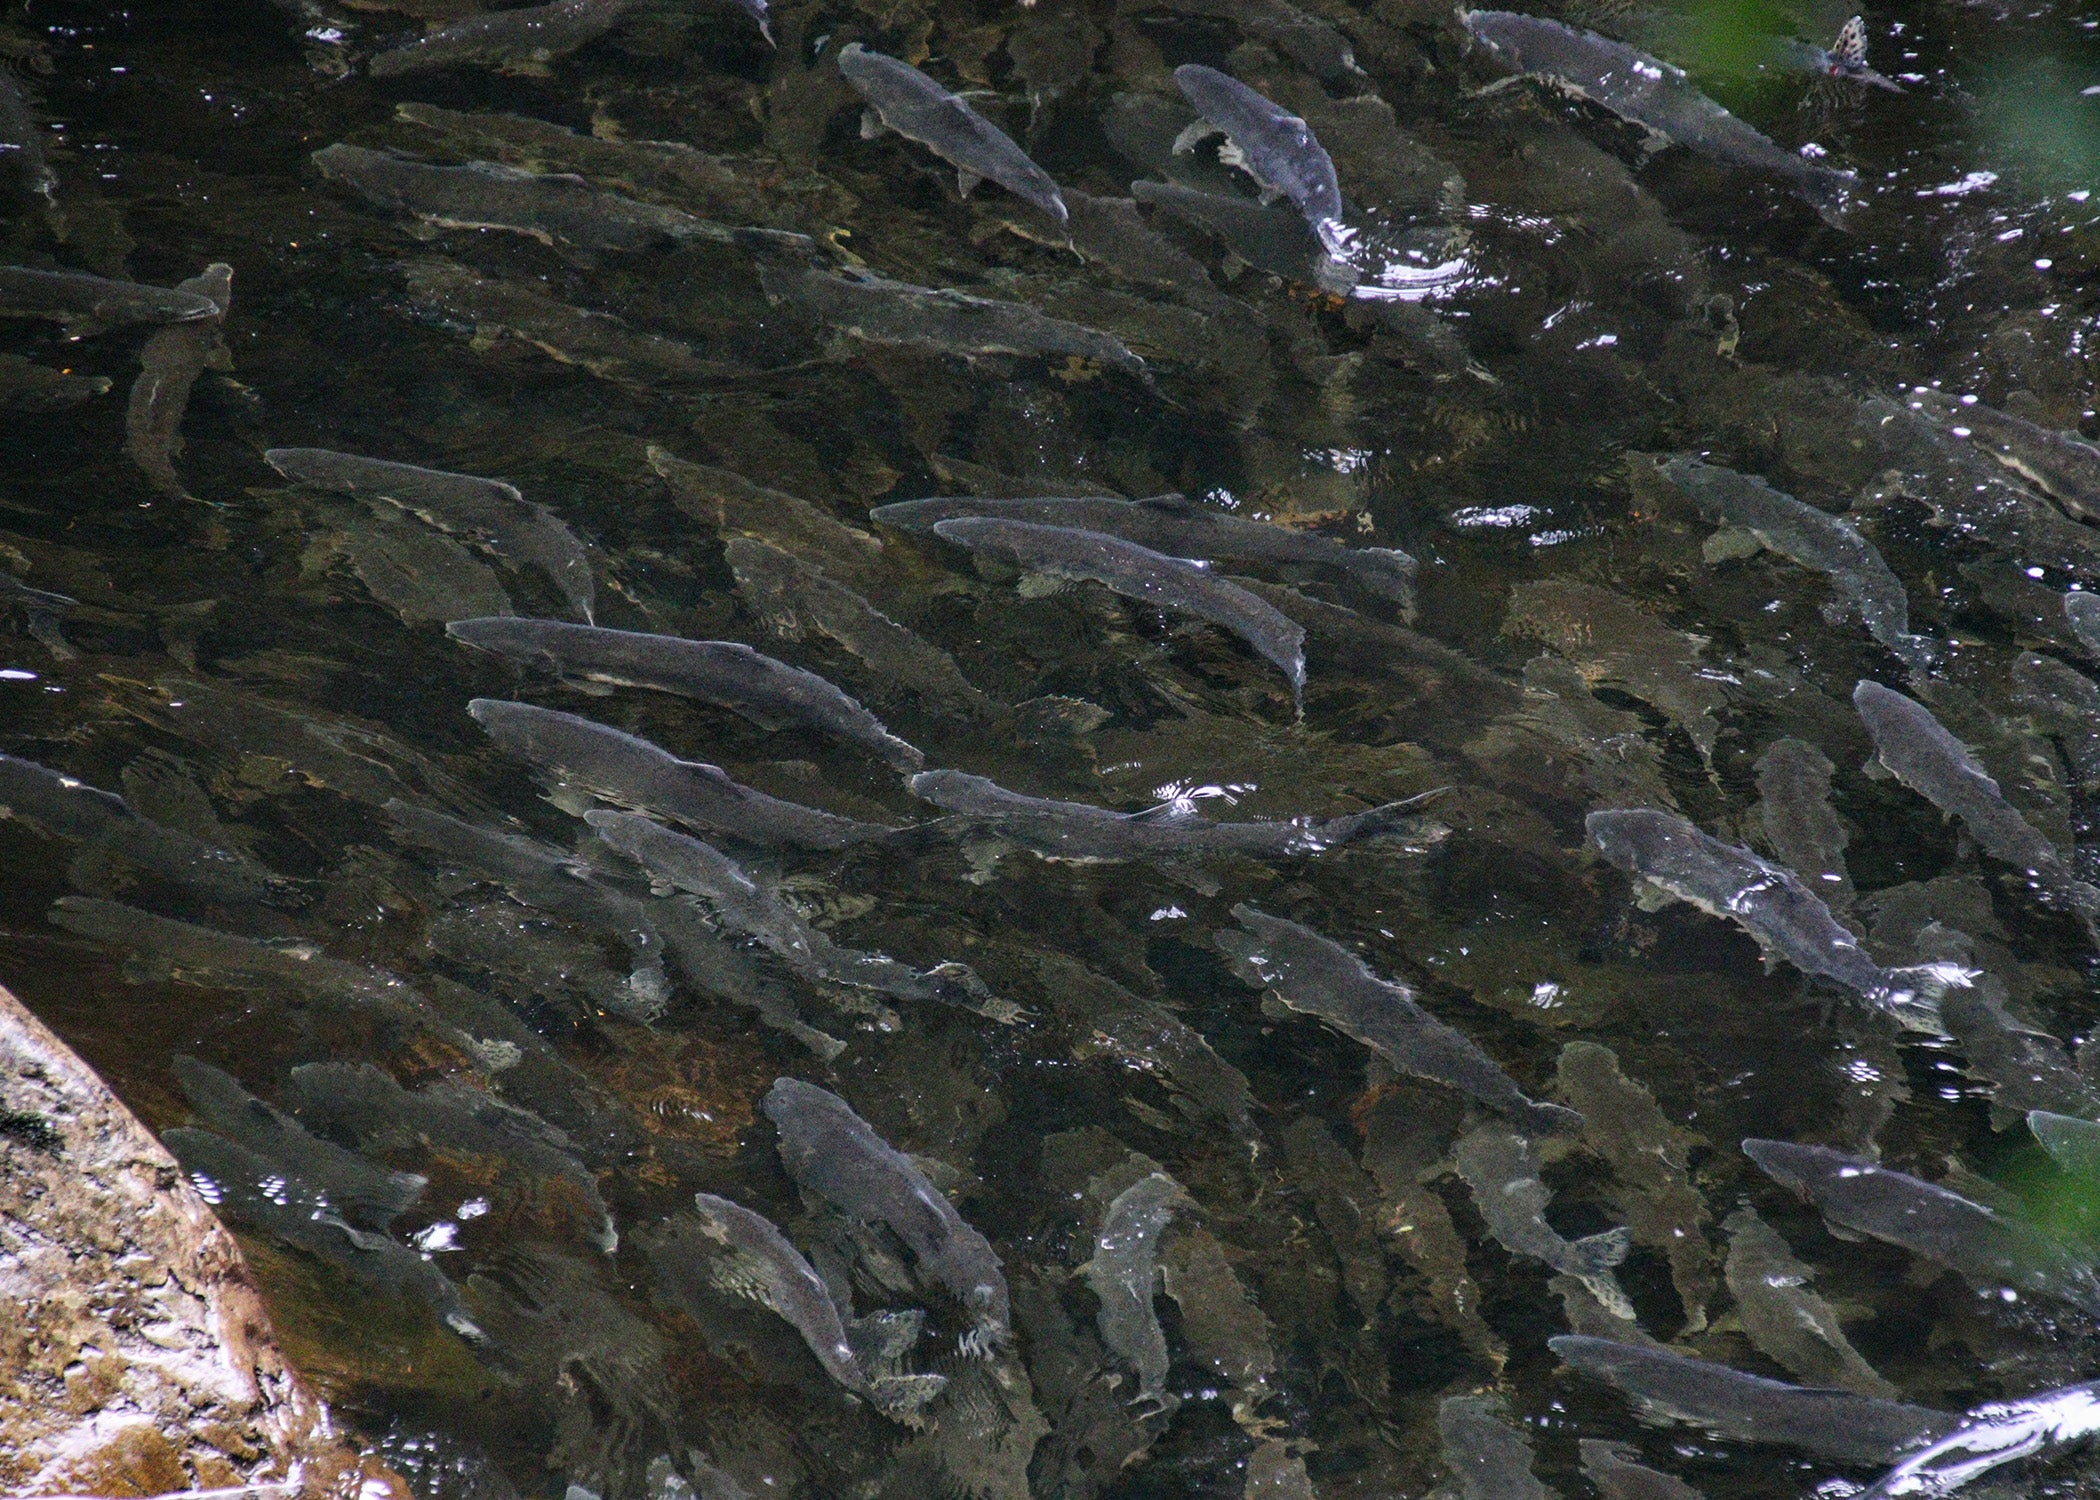 migrating salmon